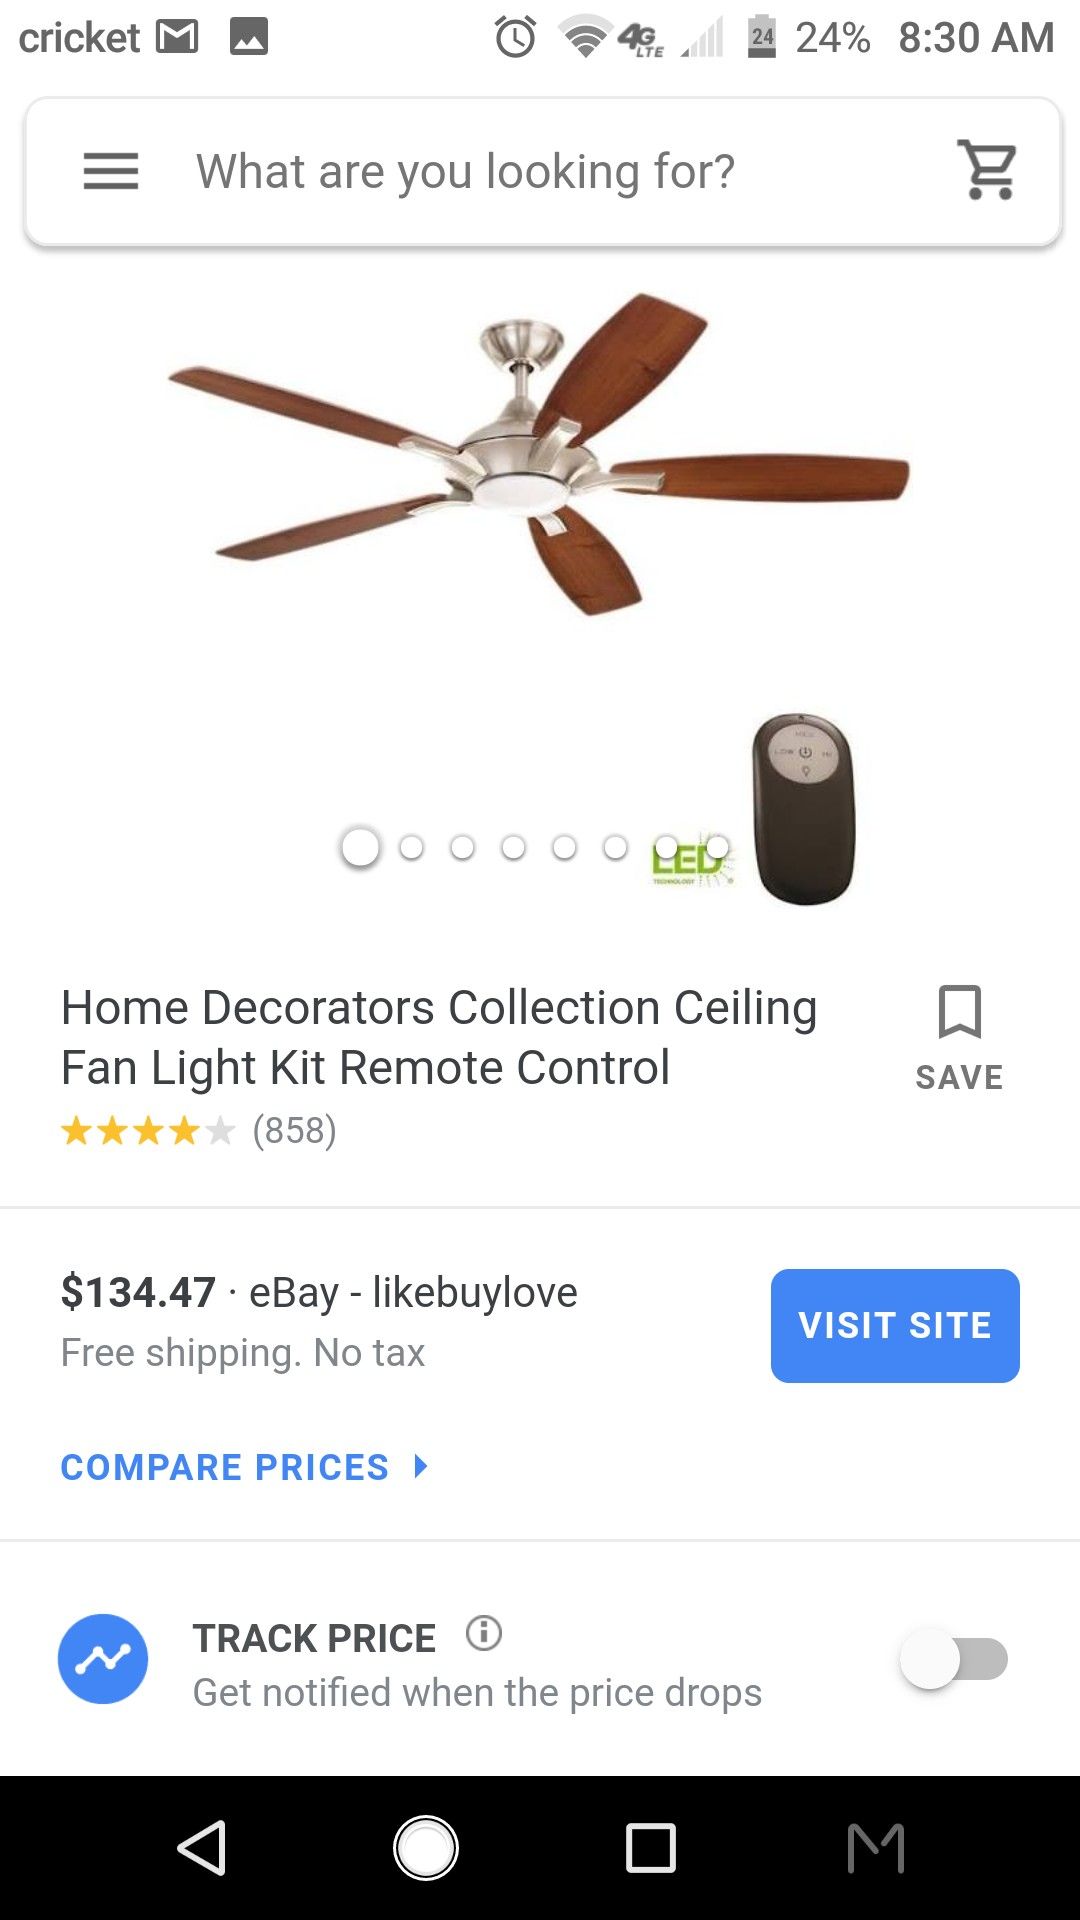 Home Decorators Collection Ceiling Fanj Light Kit Remote Control